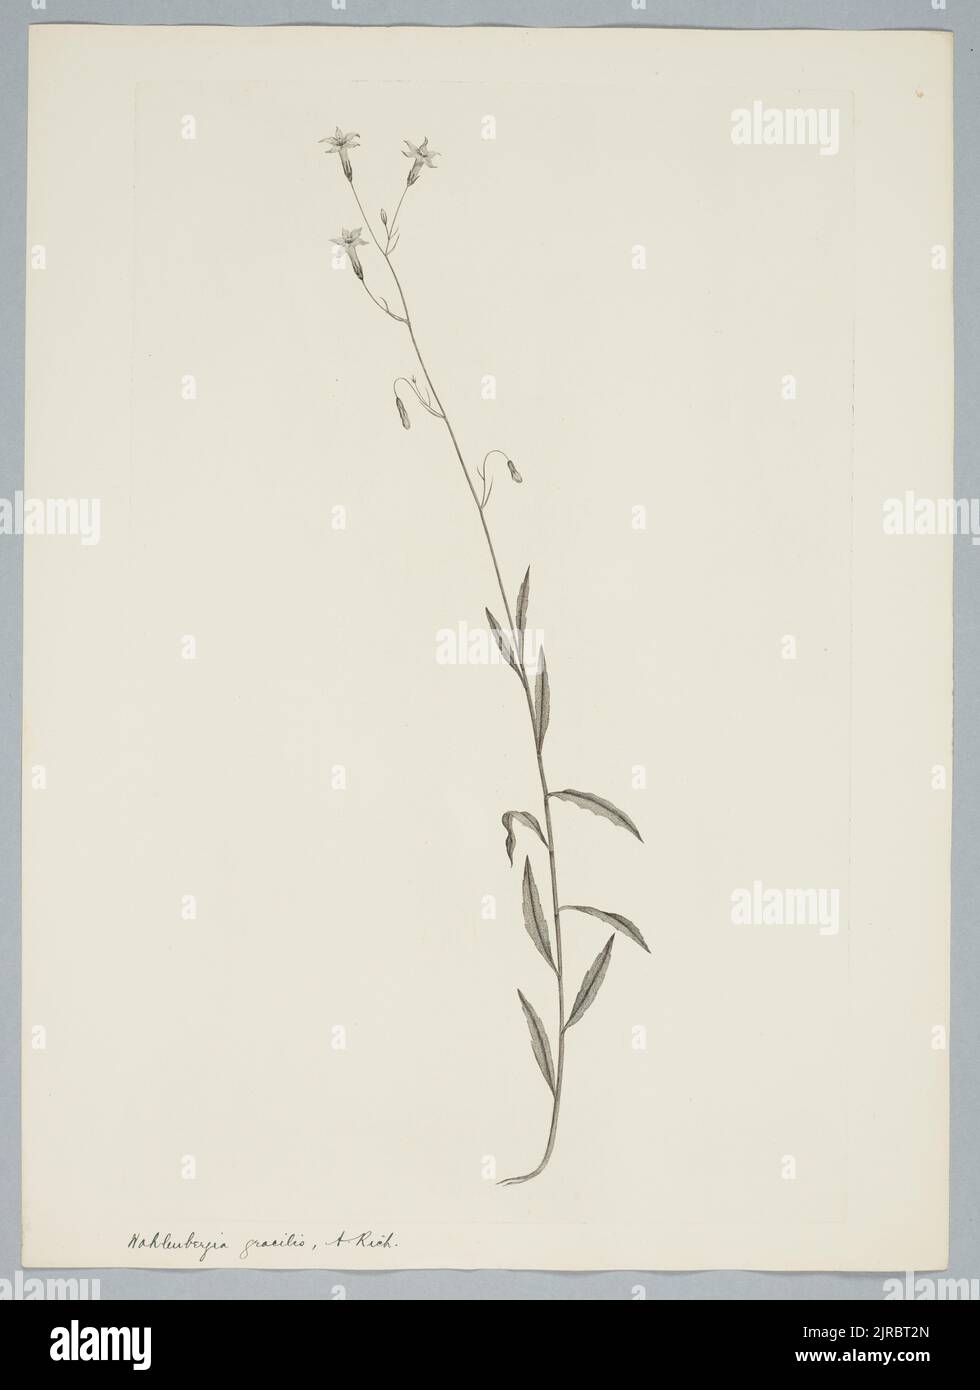 Wahlenbergia communis Carolin, by Sydney Parkinson. Gift of the British Museum, 1895. Stock Photo